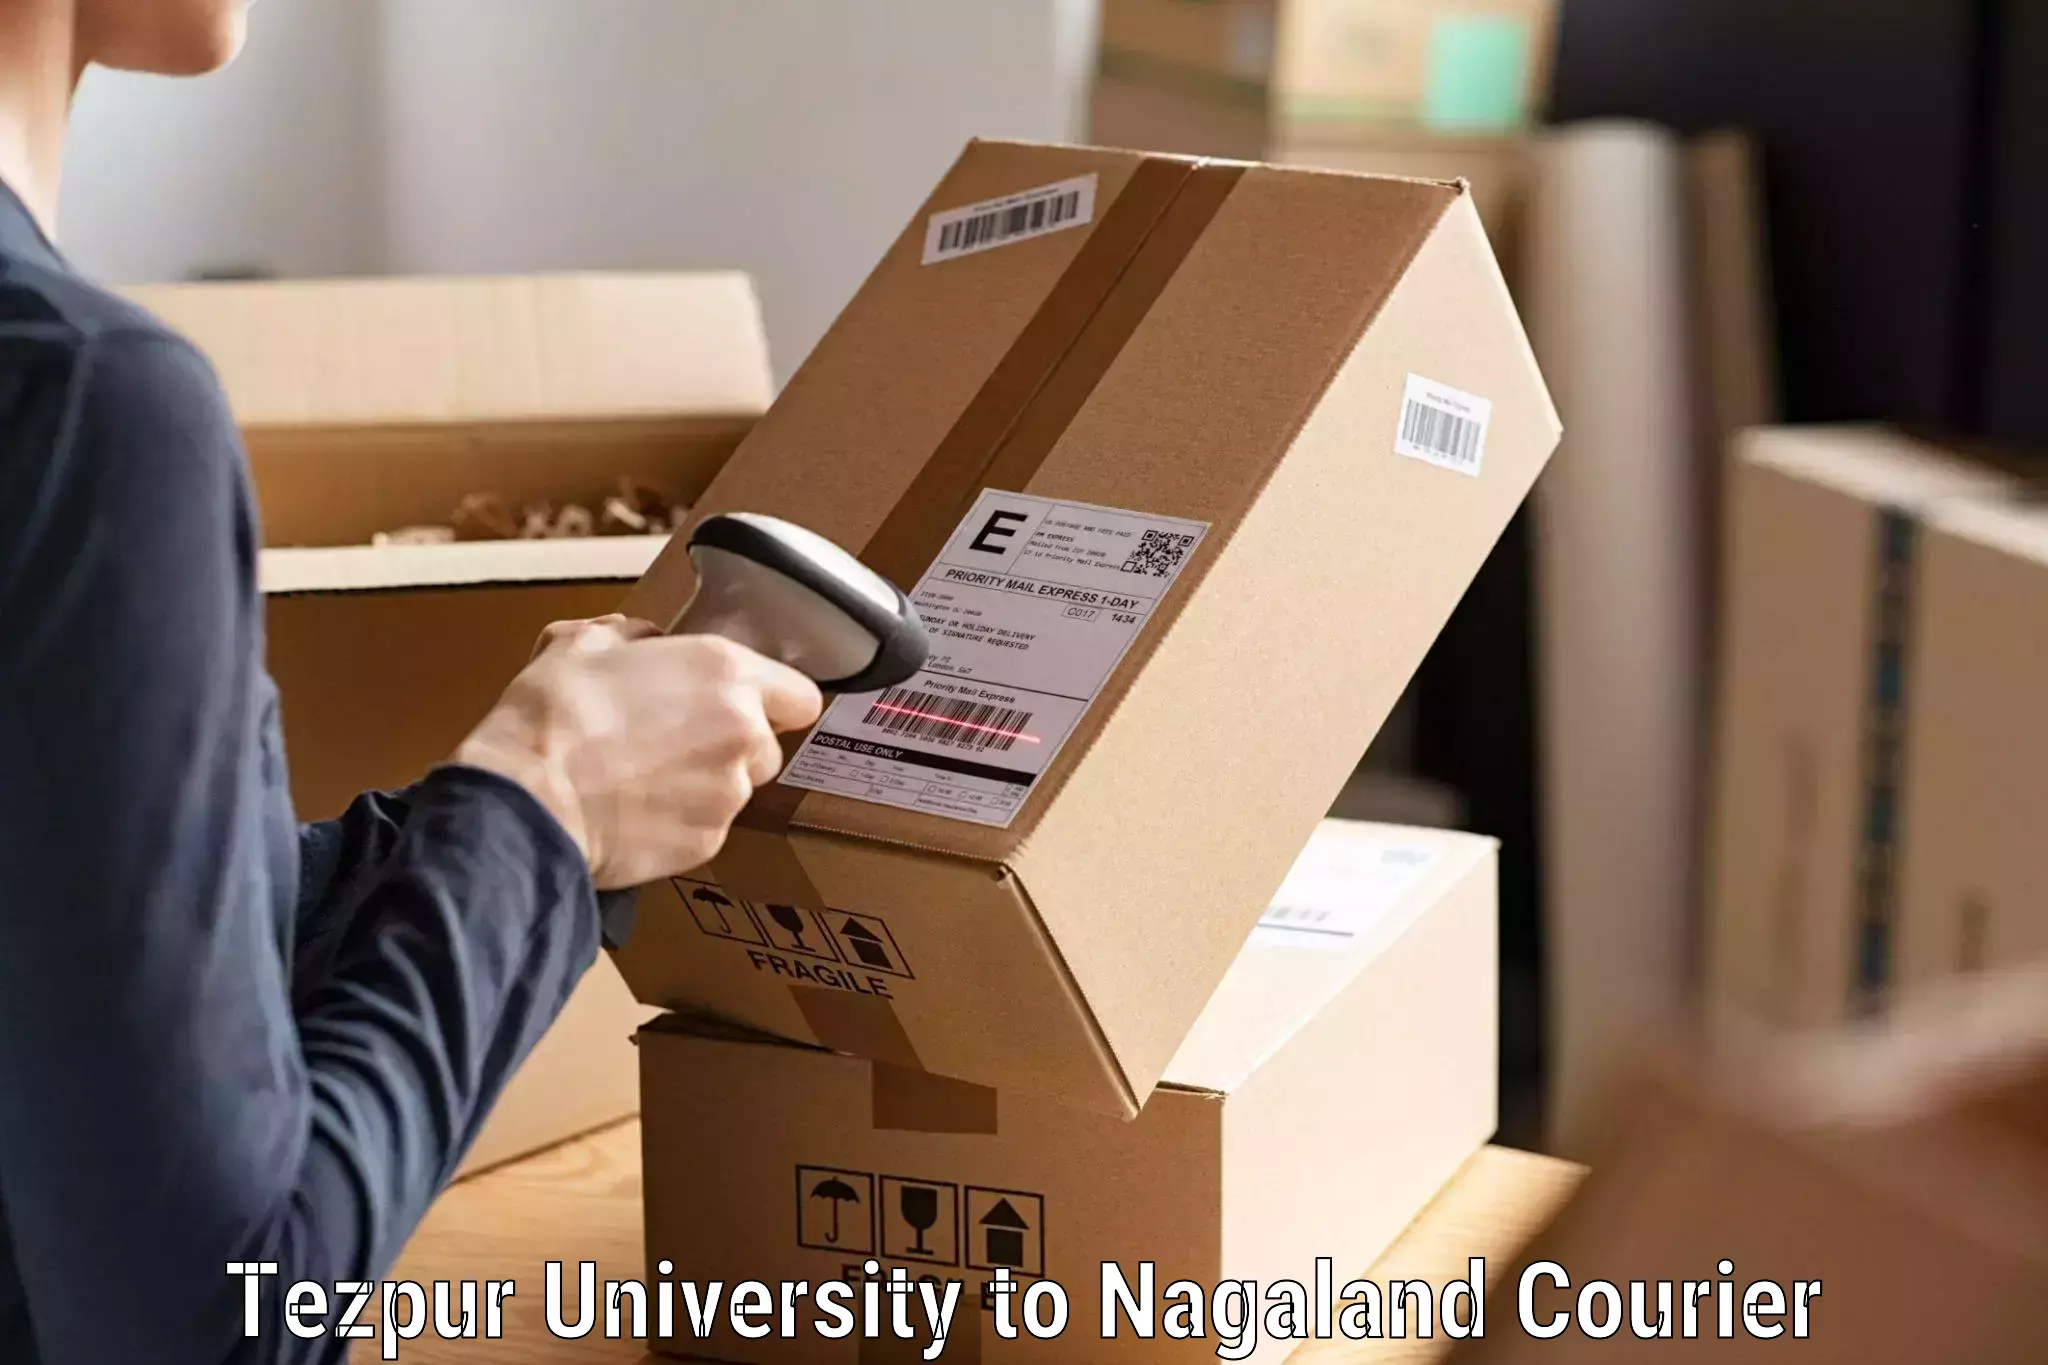 Reliable courier service Tezpur University to Kohima